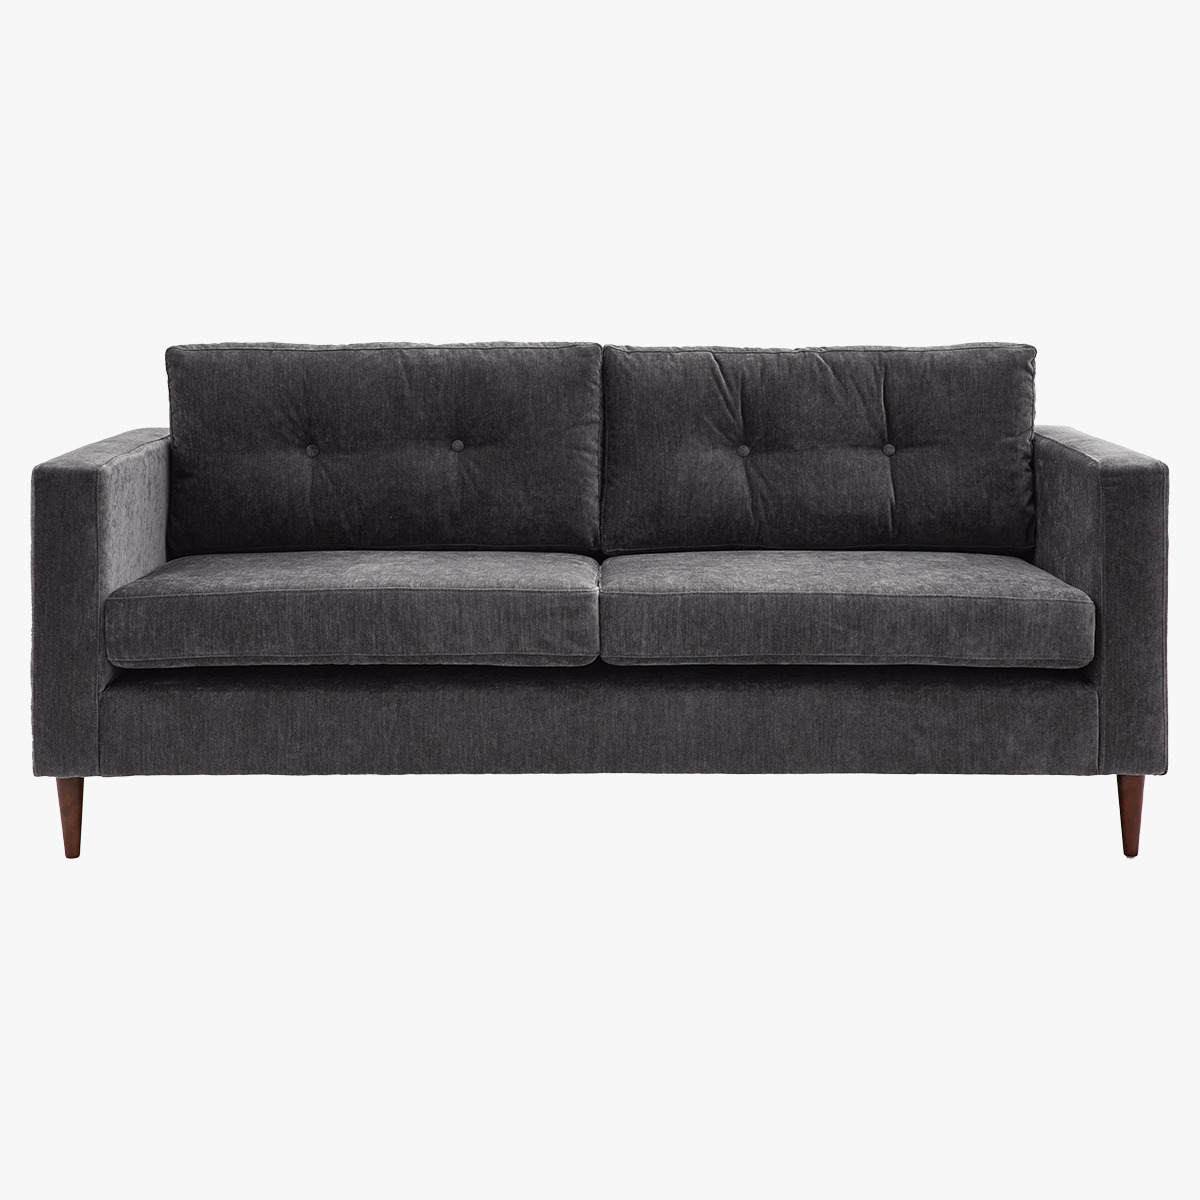 Nestler 3 Seater Sofa in Charcoal